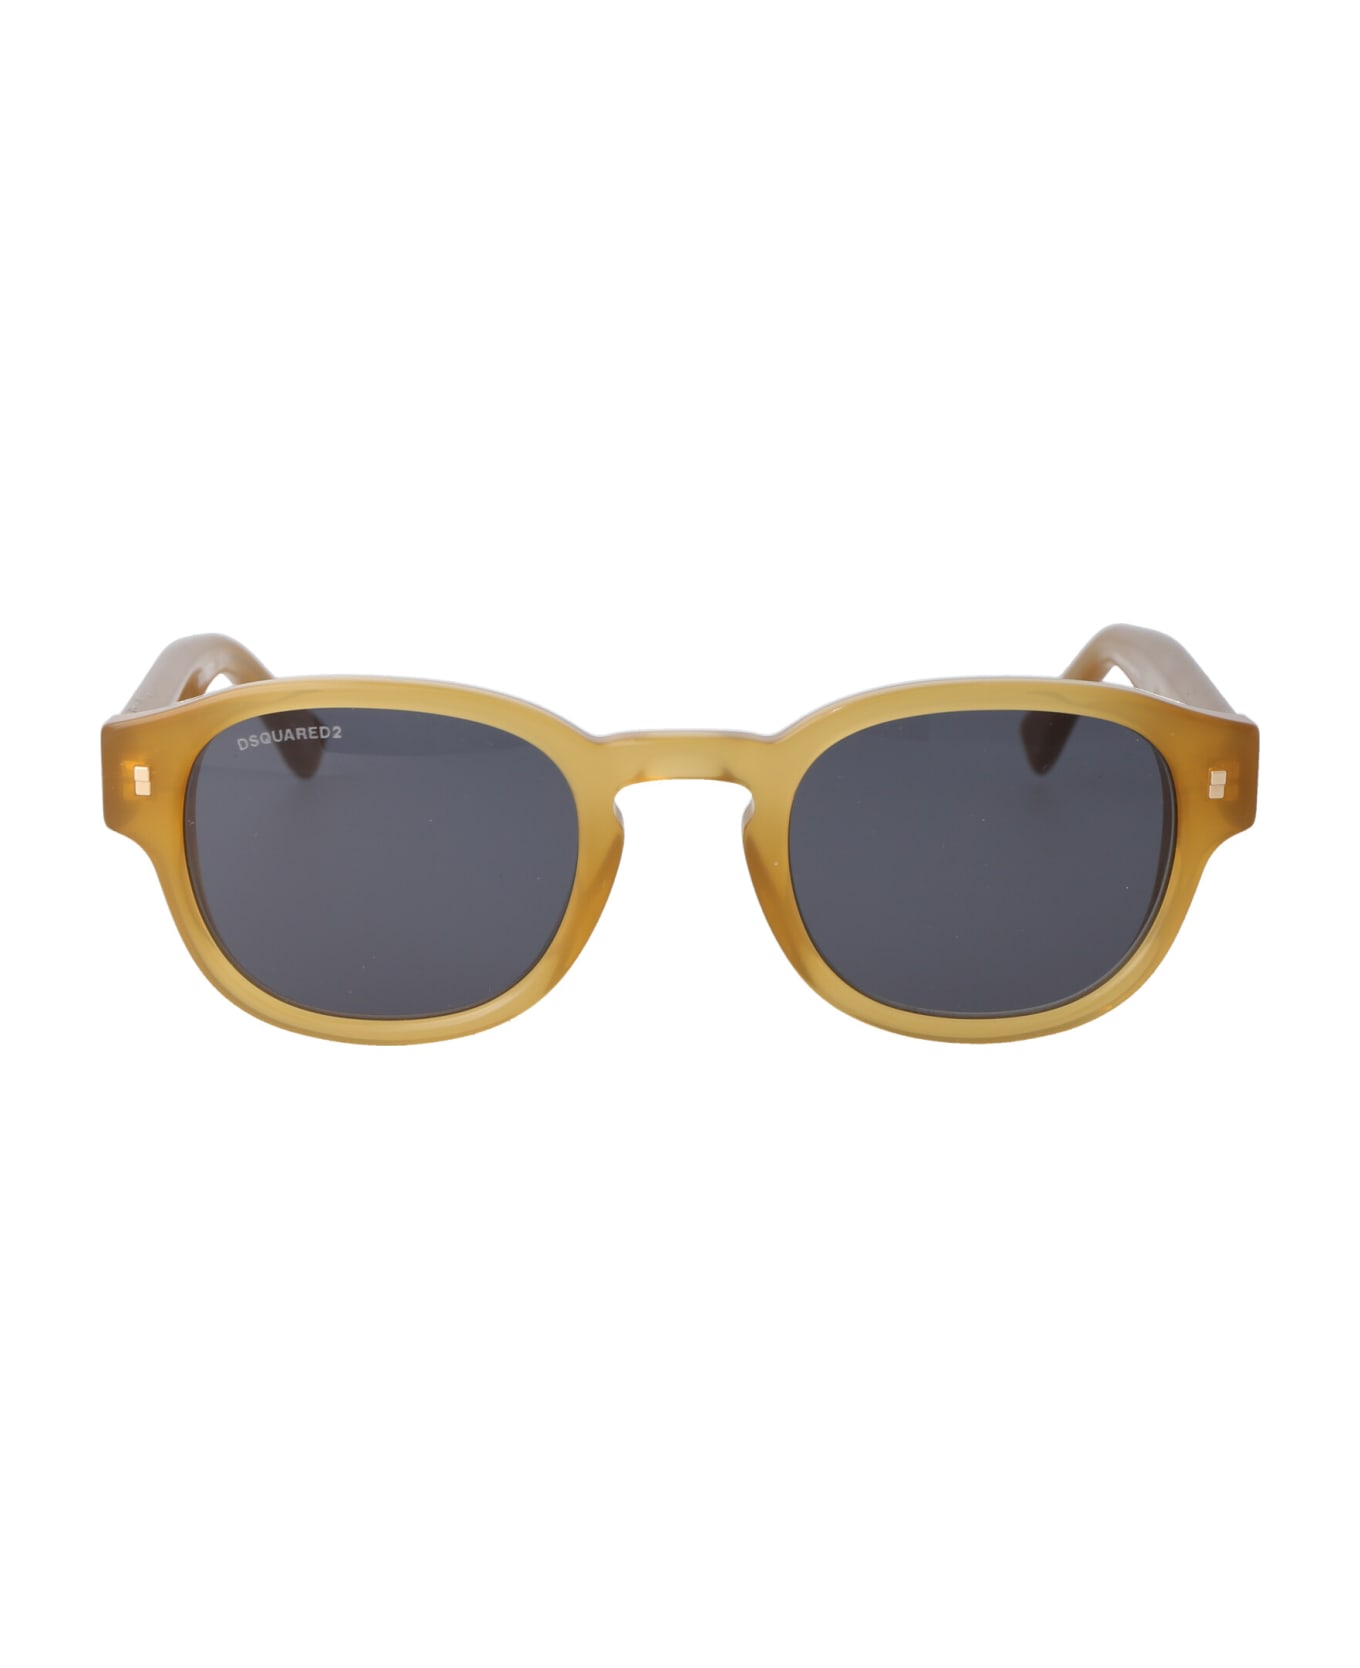 Dsquared2 Eyewear D2 0014/s Sunglasses - FT4IR MIELE ORO